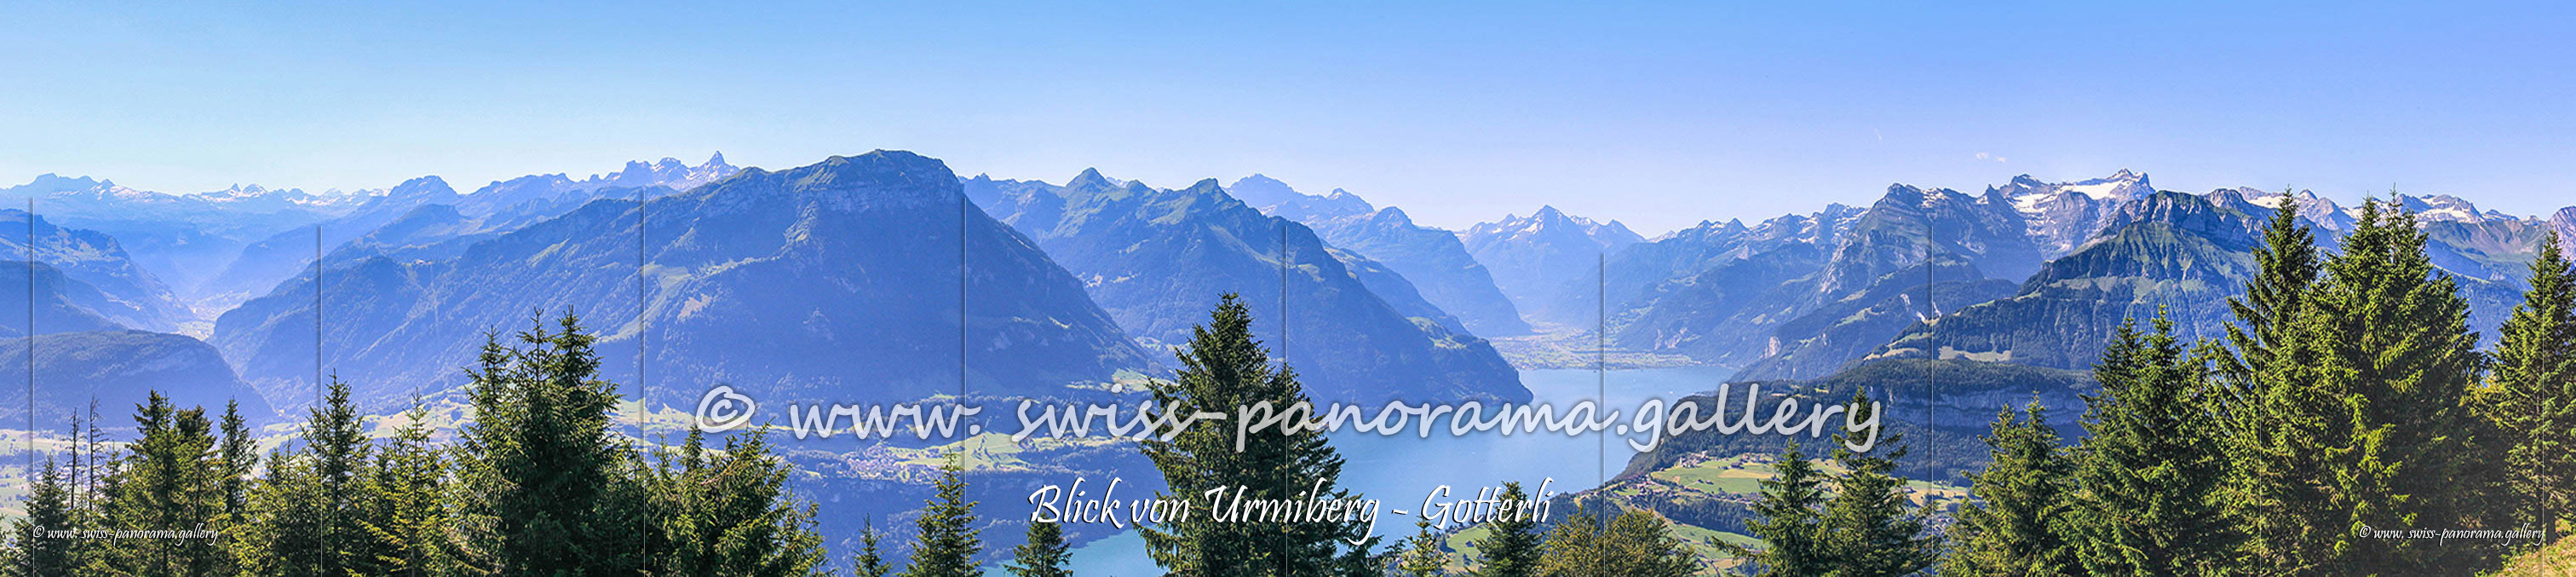 Schweizer Bergpanorama Urmiberg Gotterli